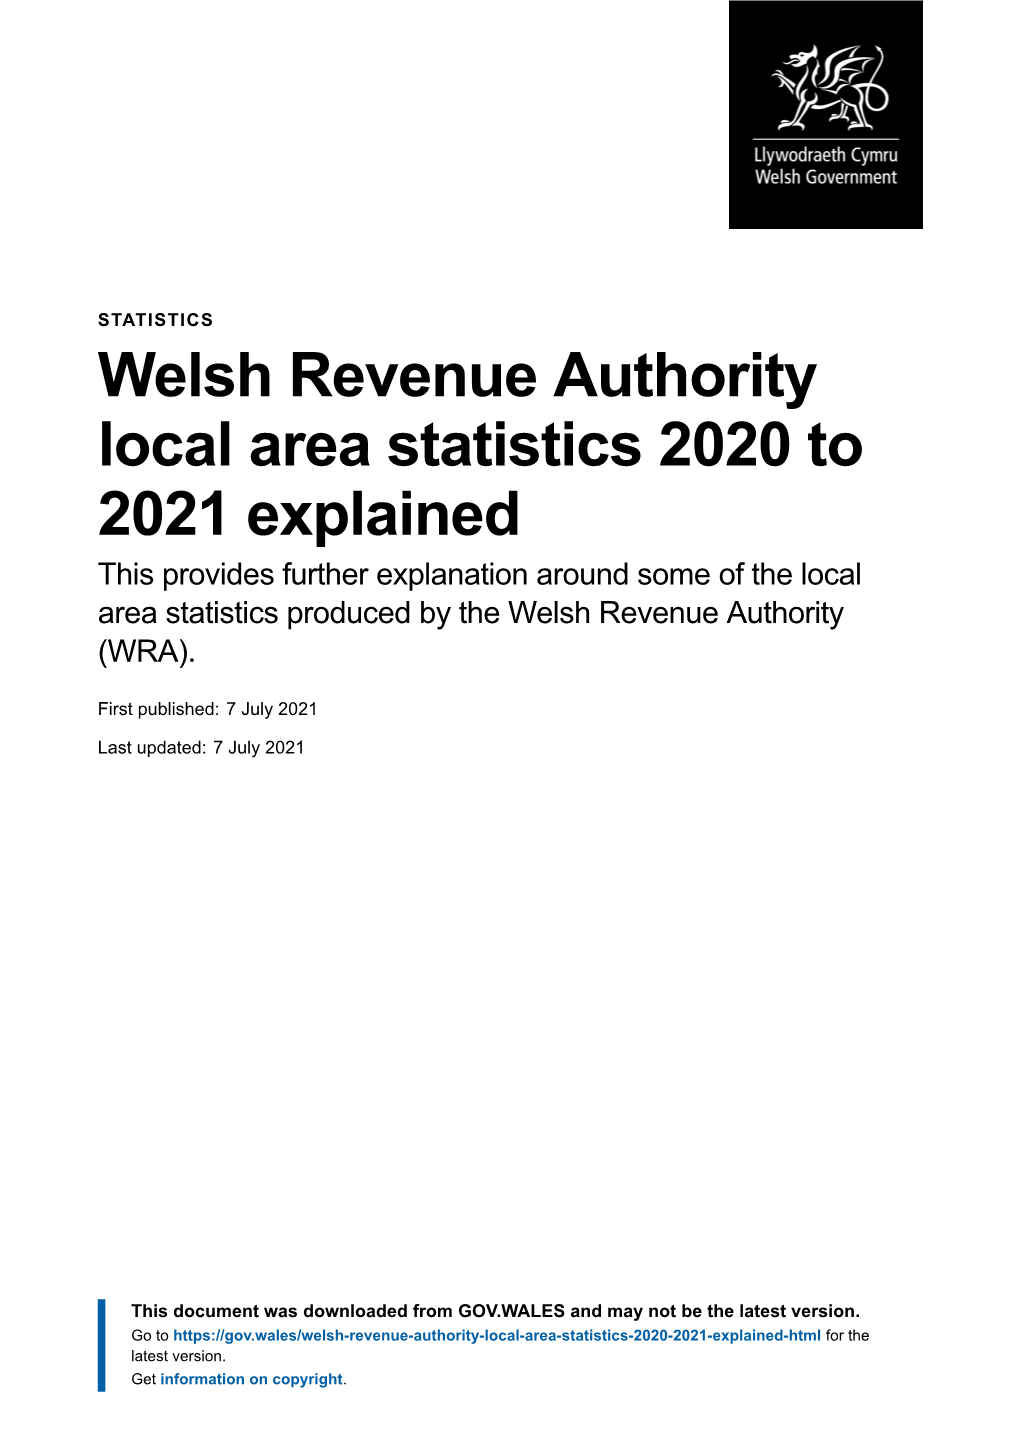 Welsh Revenue Authority Local Area Statistics 2020 To